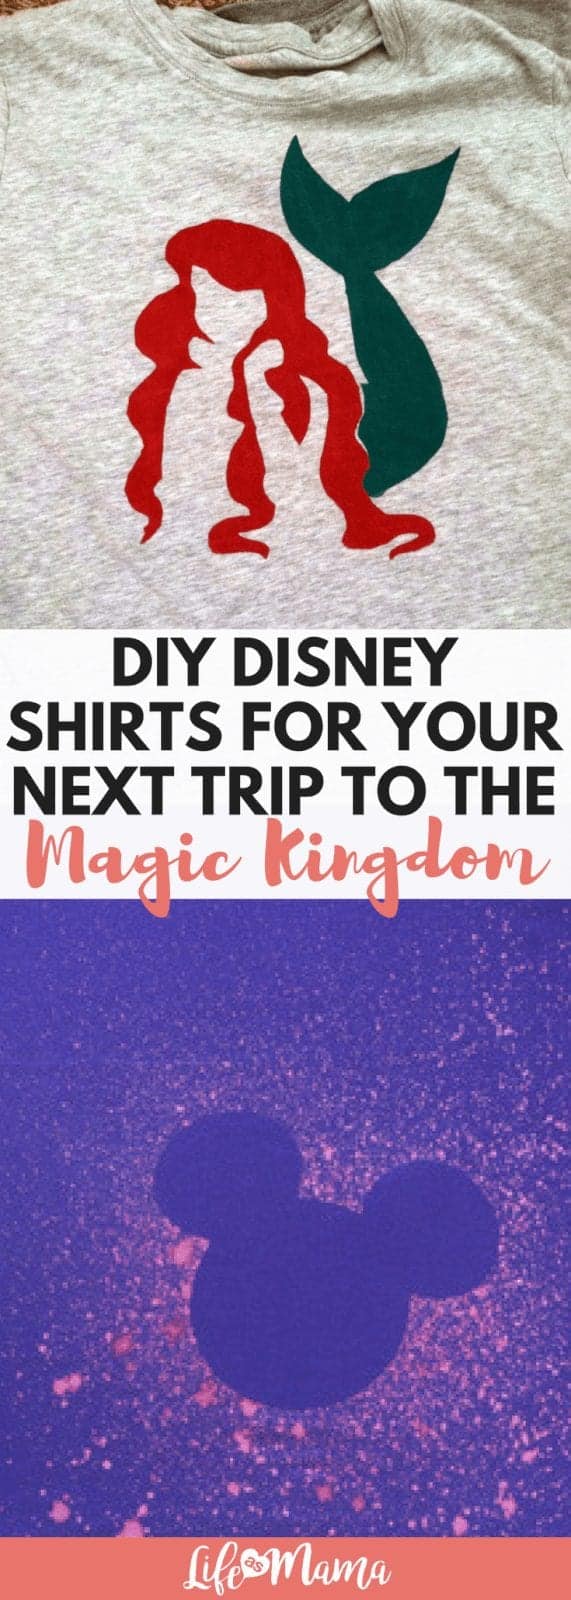 DIY Disney shirts